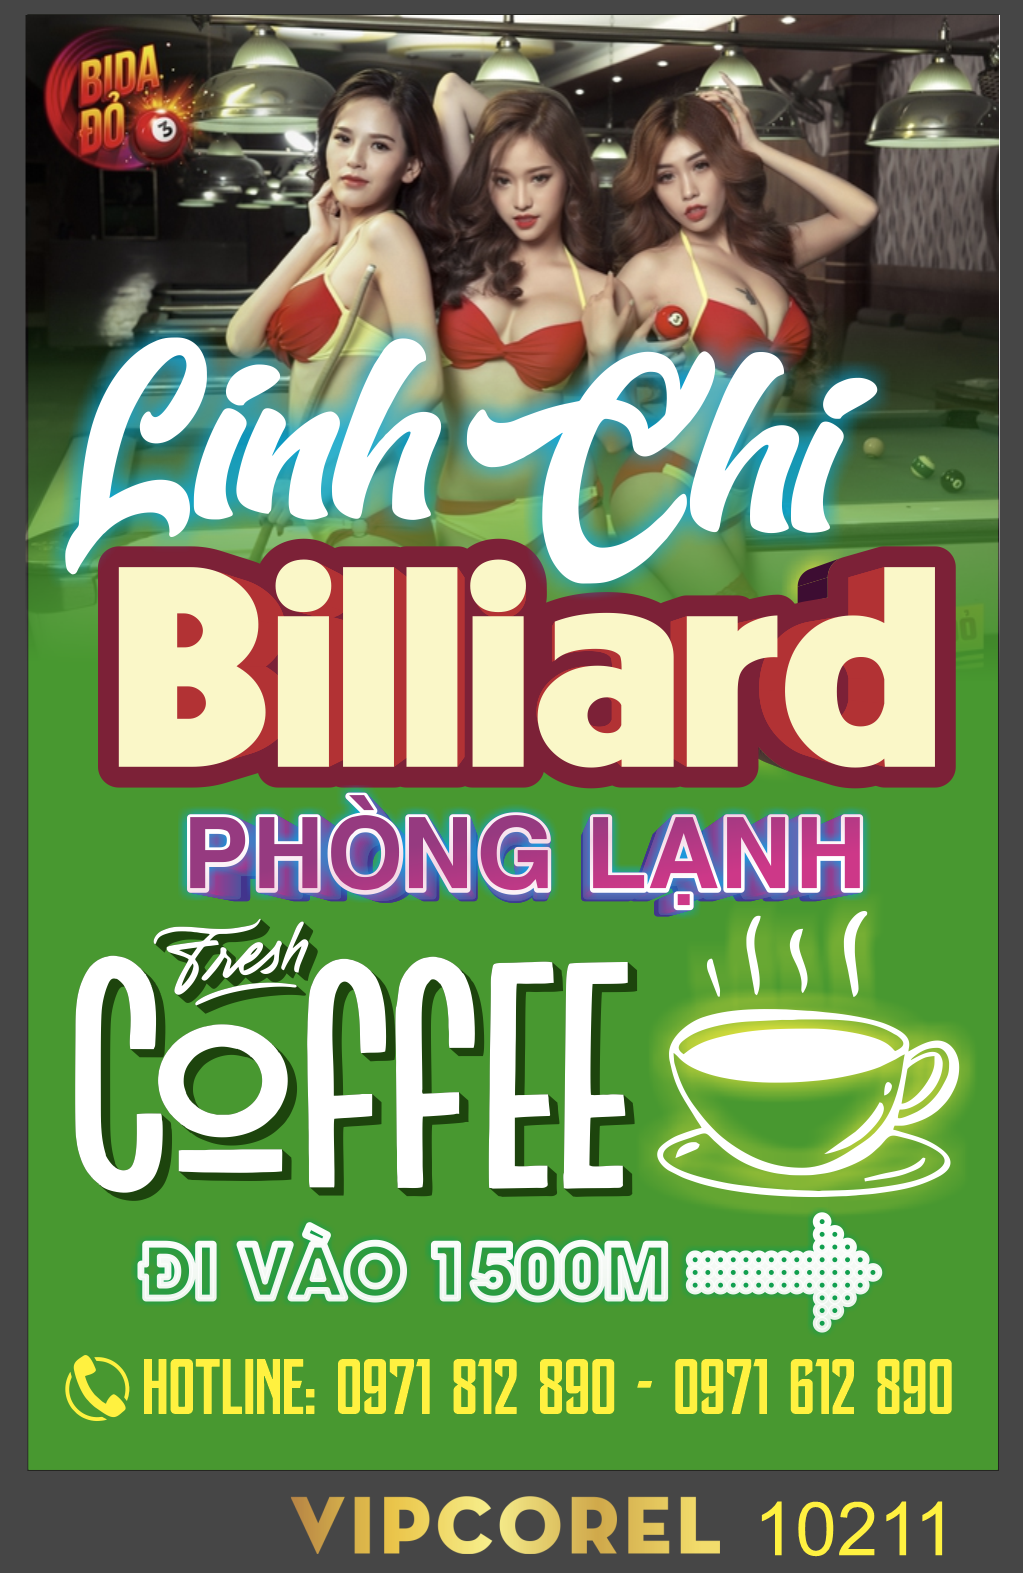 linh chi billiard phong lanh fresh coffee.png